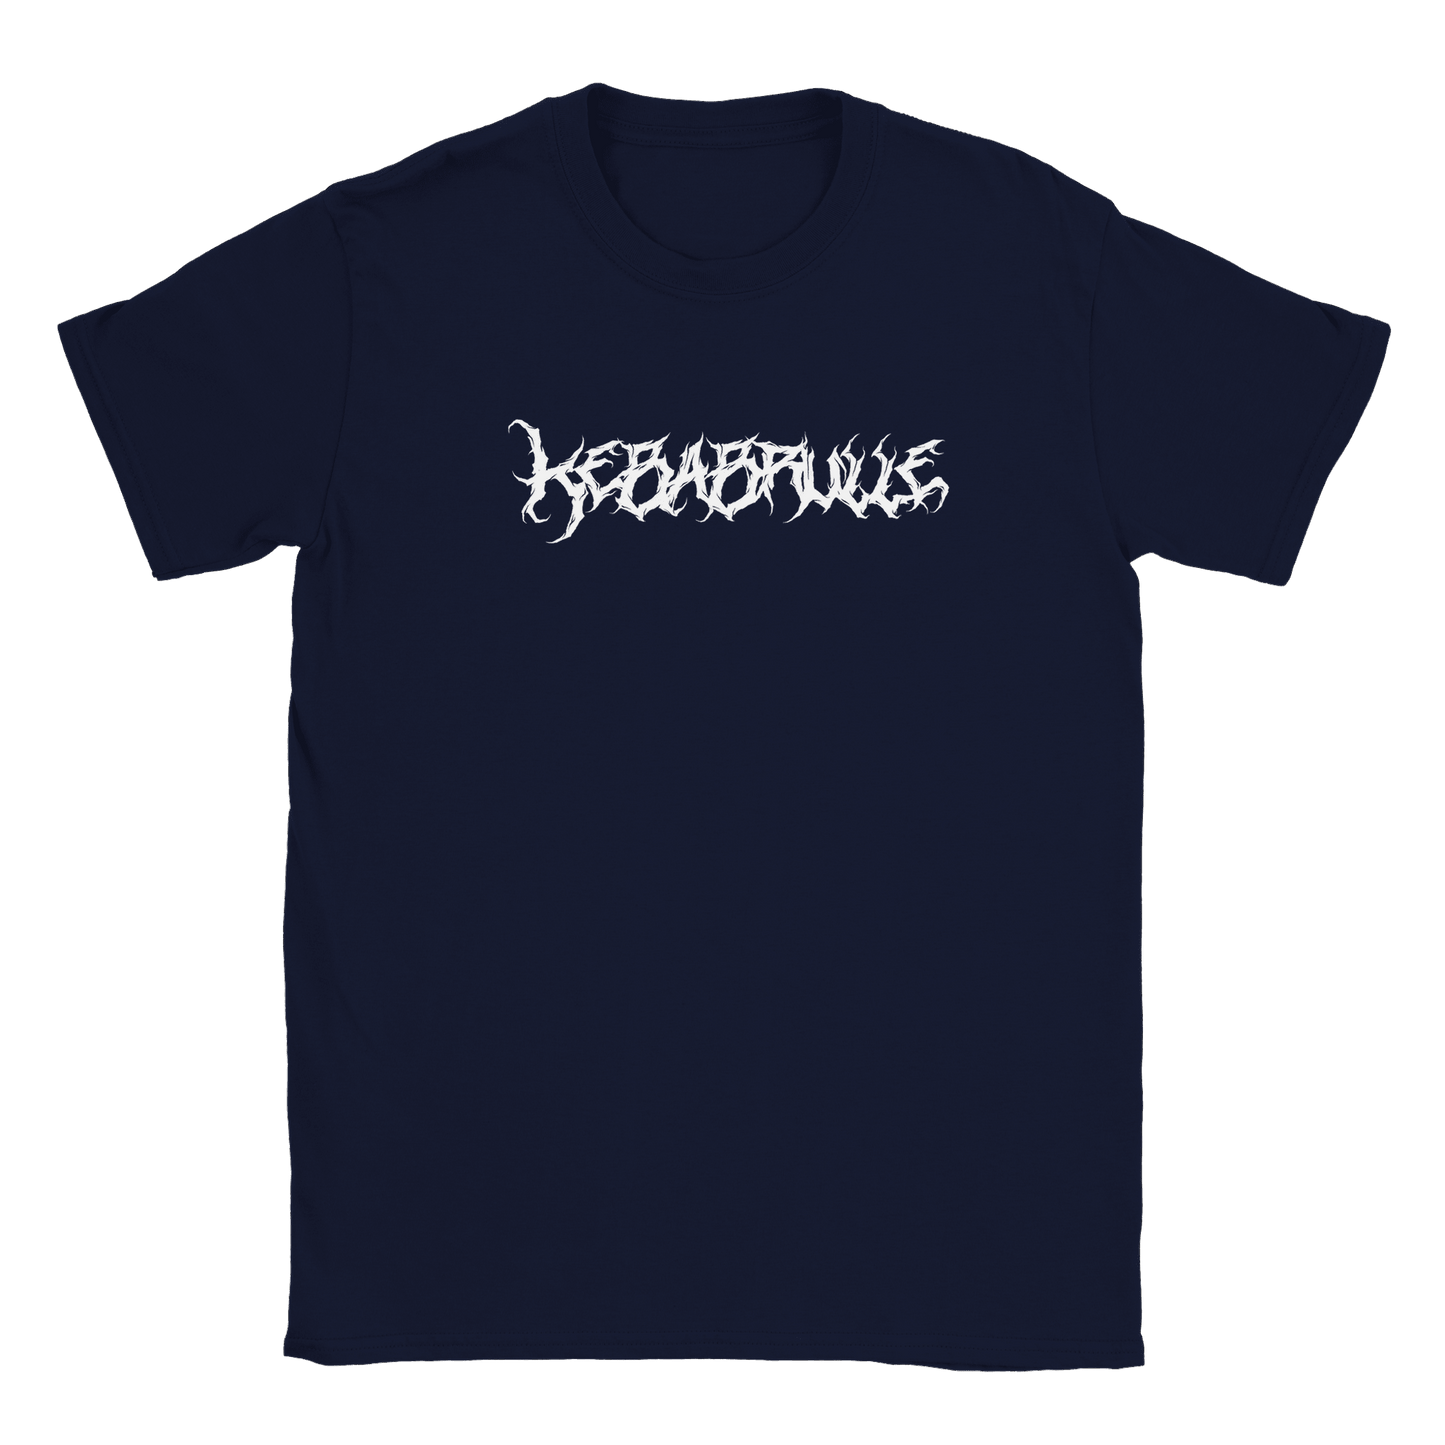 Kebabrulle - T-shirt Navy